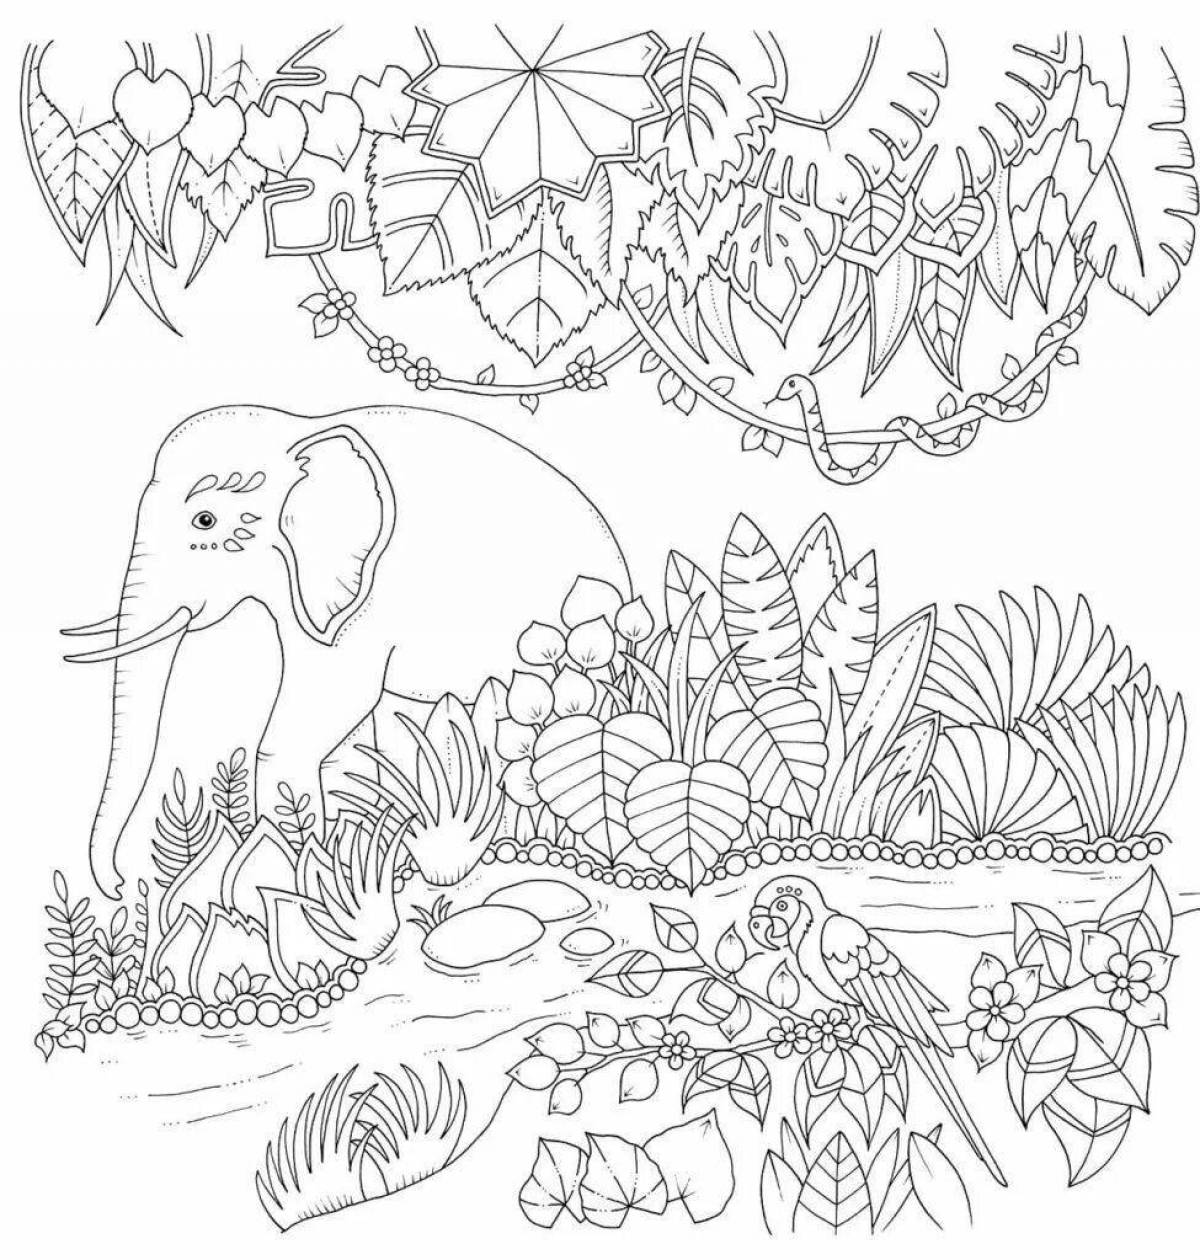 Amazing jungle coloring page - dense